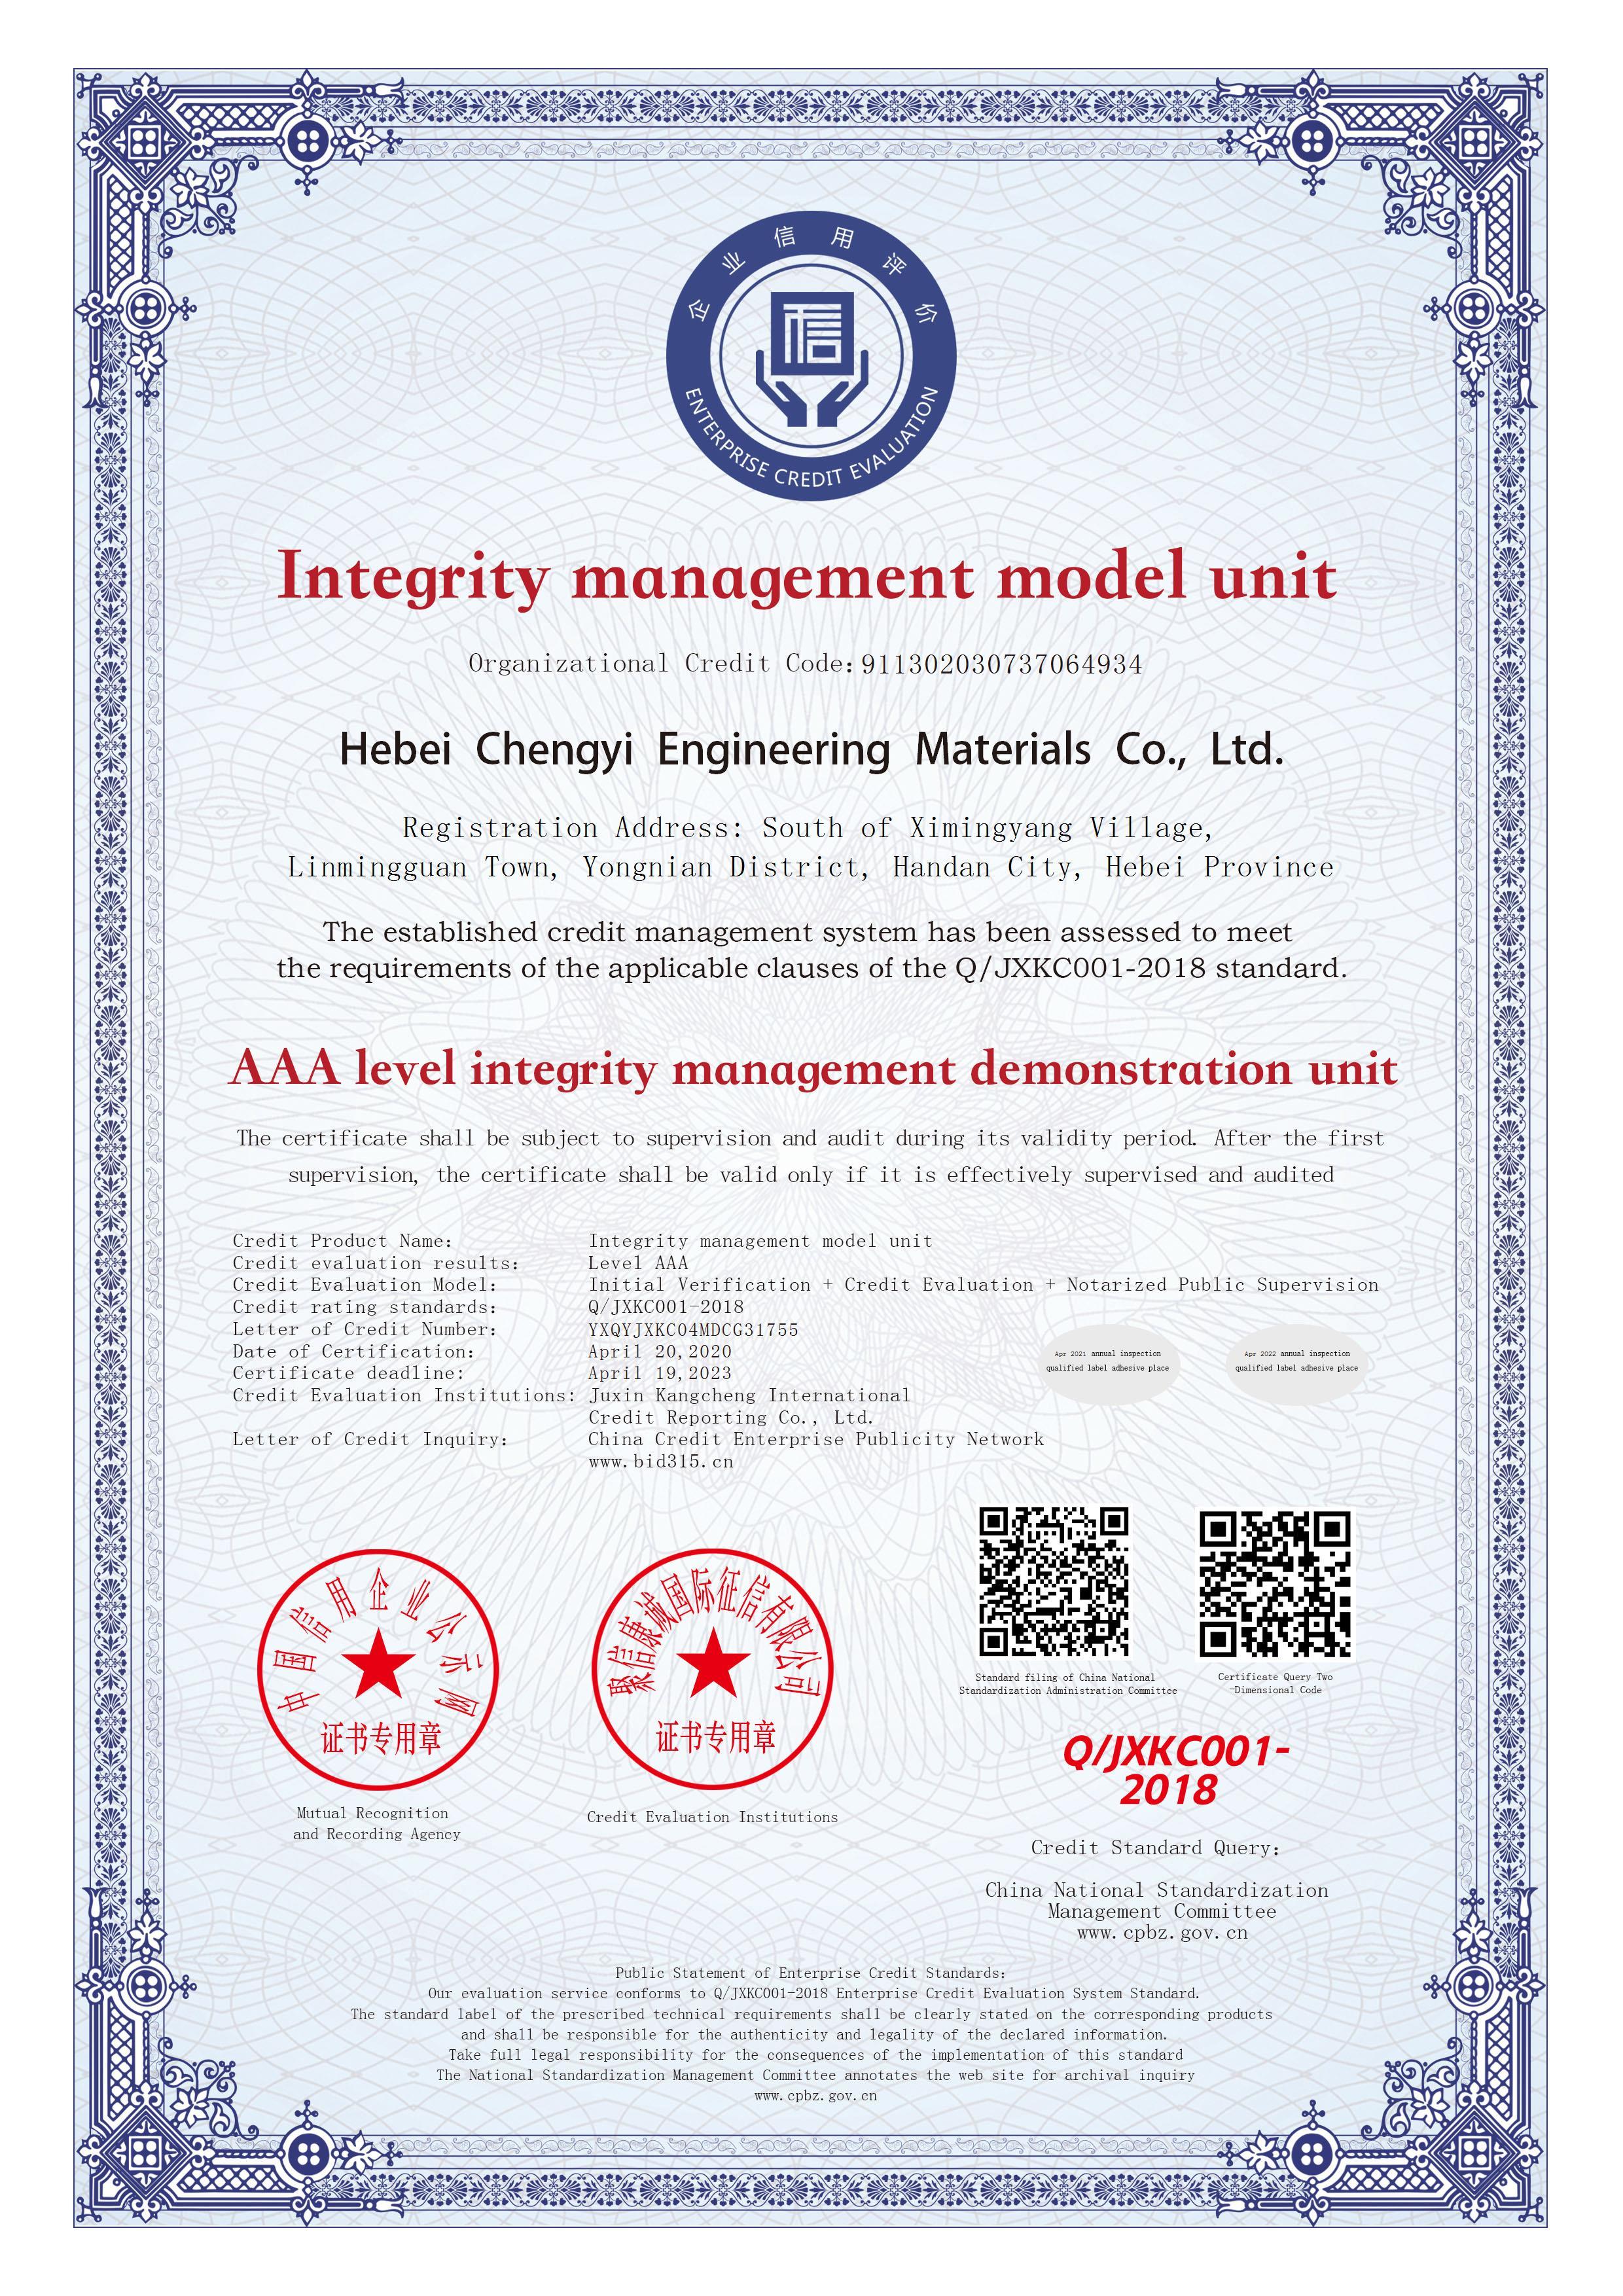 AAA grade integrity management demonstration unit